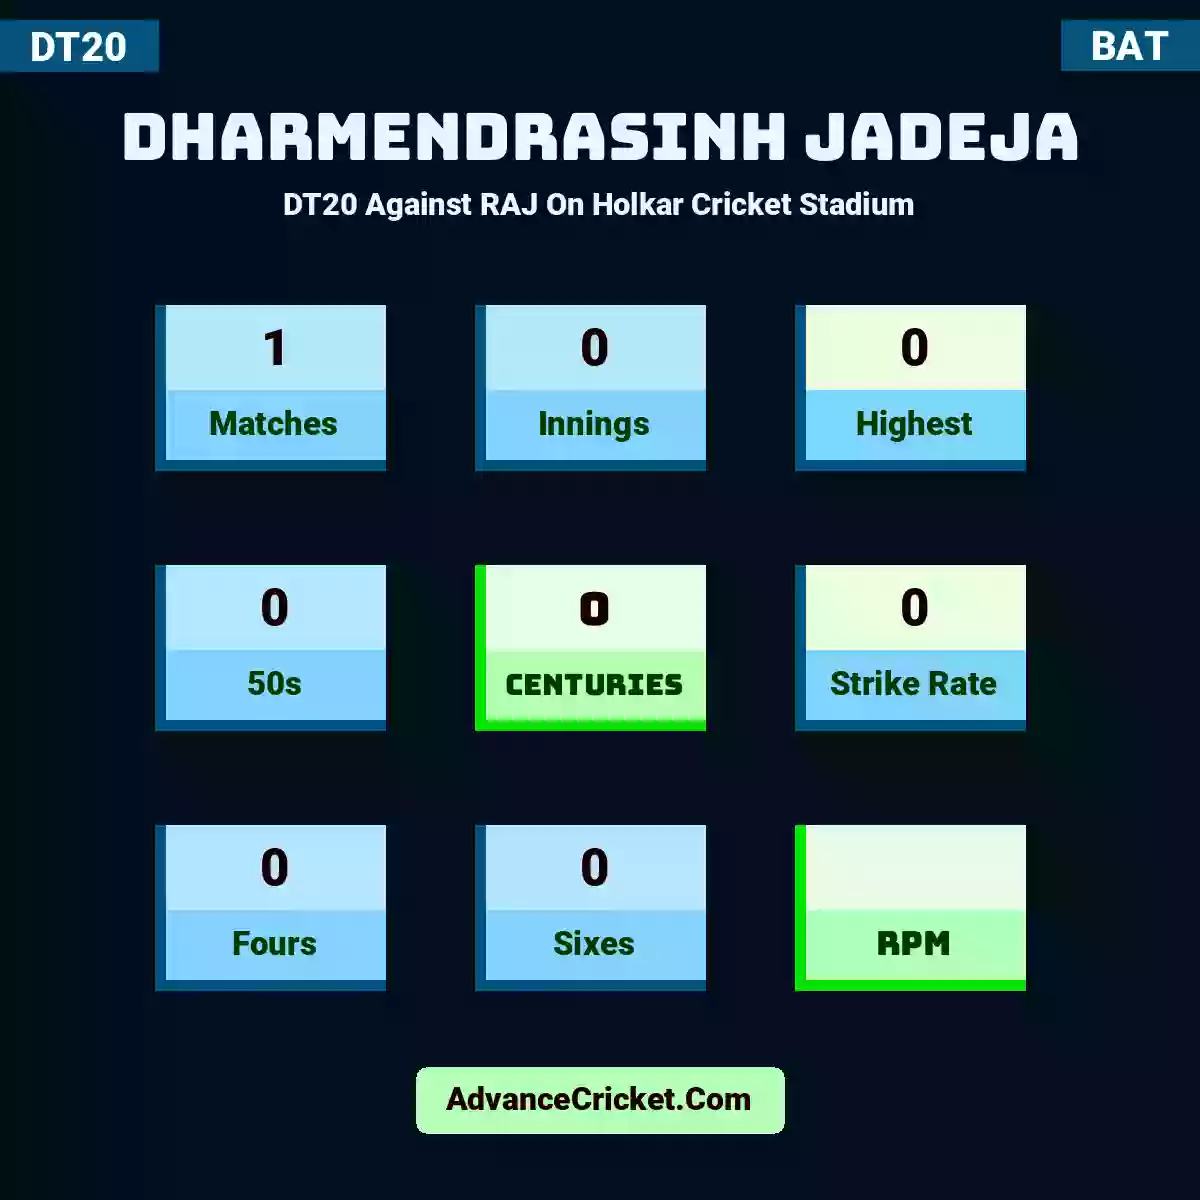 Dharmendrasinh Jadeja DT20  Against RAJ On Holkar Cricket Stadium, Dharmendrasinh Jadeja played 1 matches, scored 0 runs as highest, 0 half-centuries, and 0 centuries, with a strike rate of 0. D.Jadeja hit 0 fours and 0 sixes.